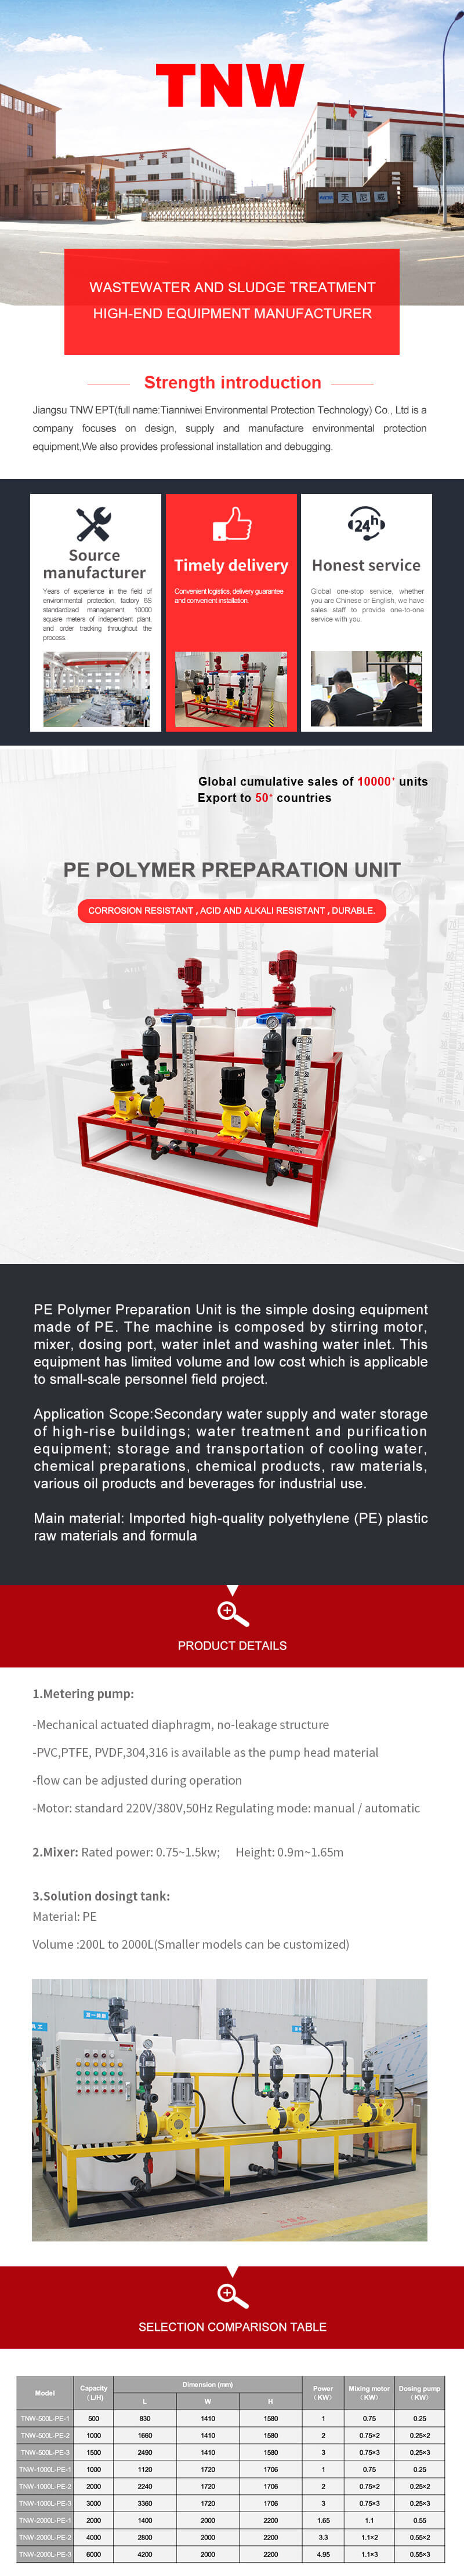 PE Polymer Preparation Unit